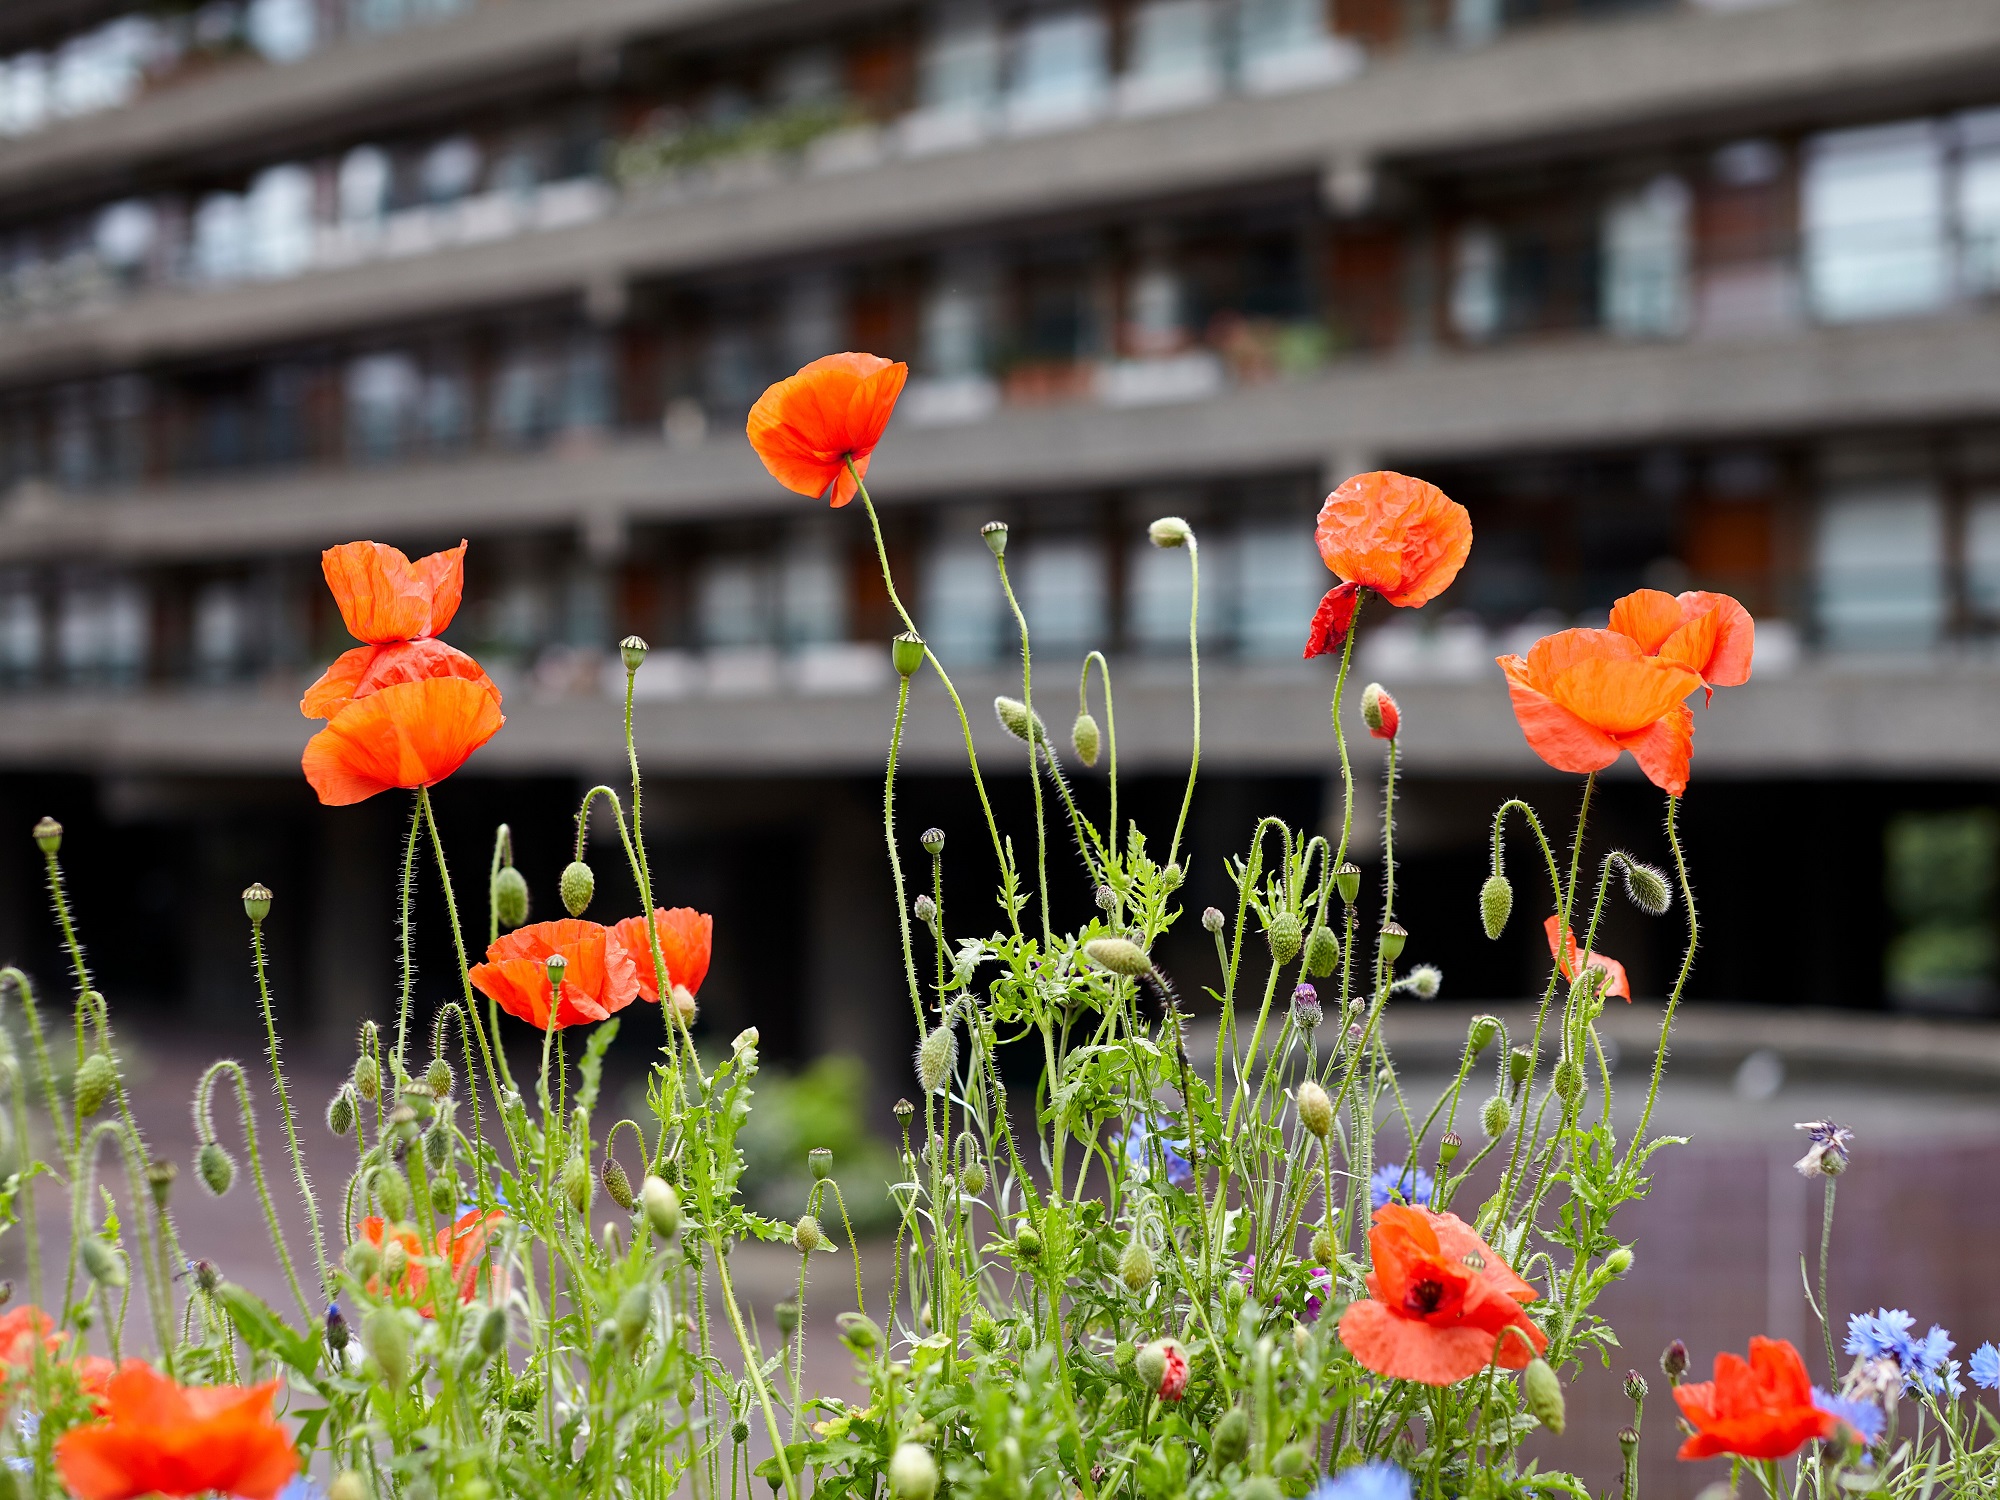 Wild poppies on a London estate. Credit Studio PB via Shutterstock.com